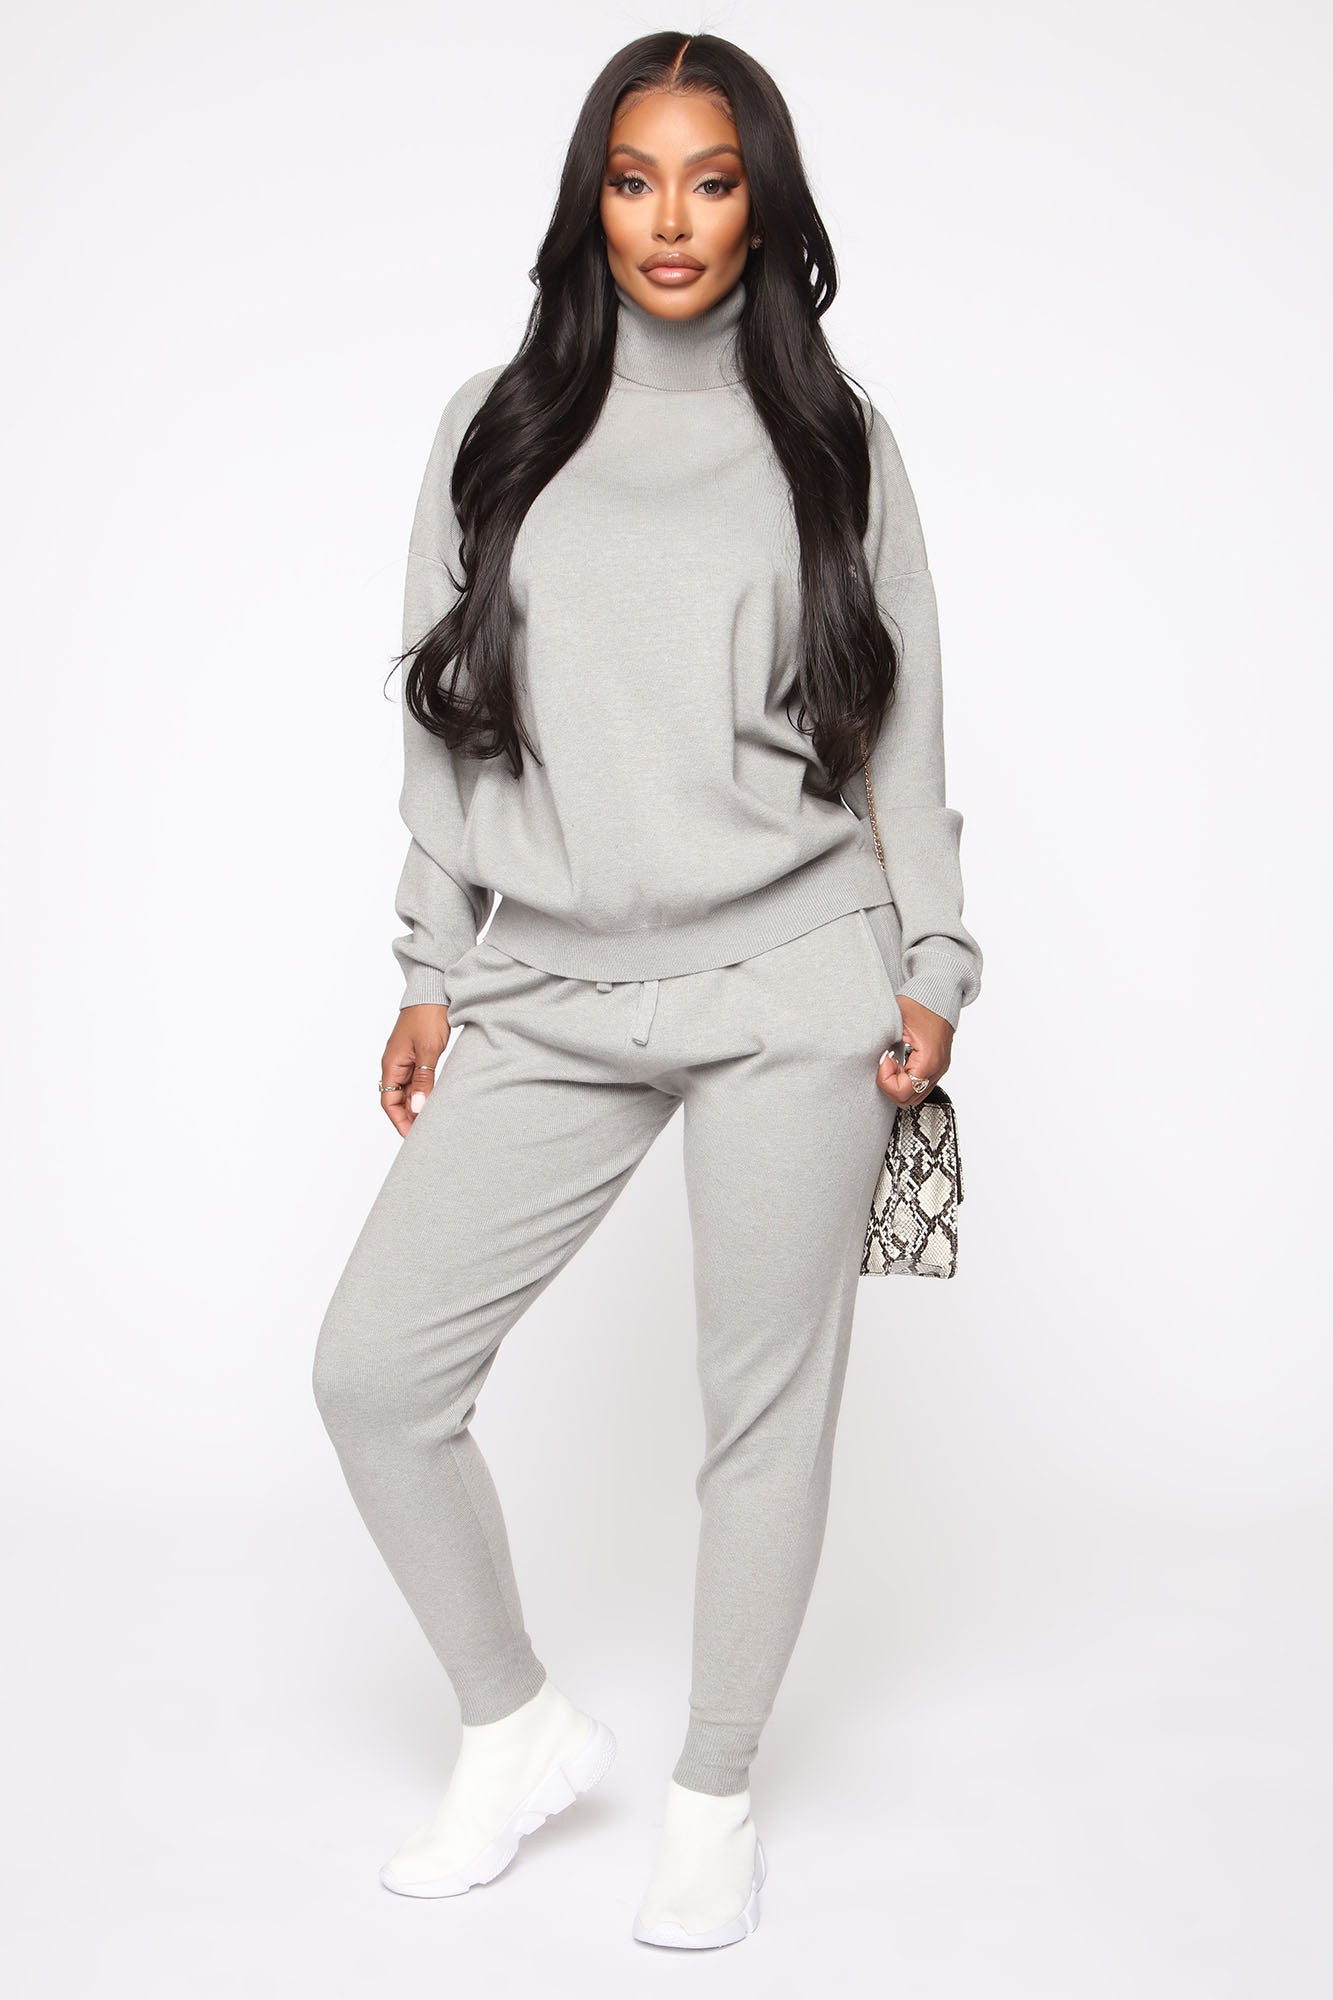 Got Me Chilled Down Sweater Set - Heather Grey, Fashion Nova, Matching Sets